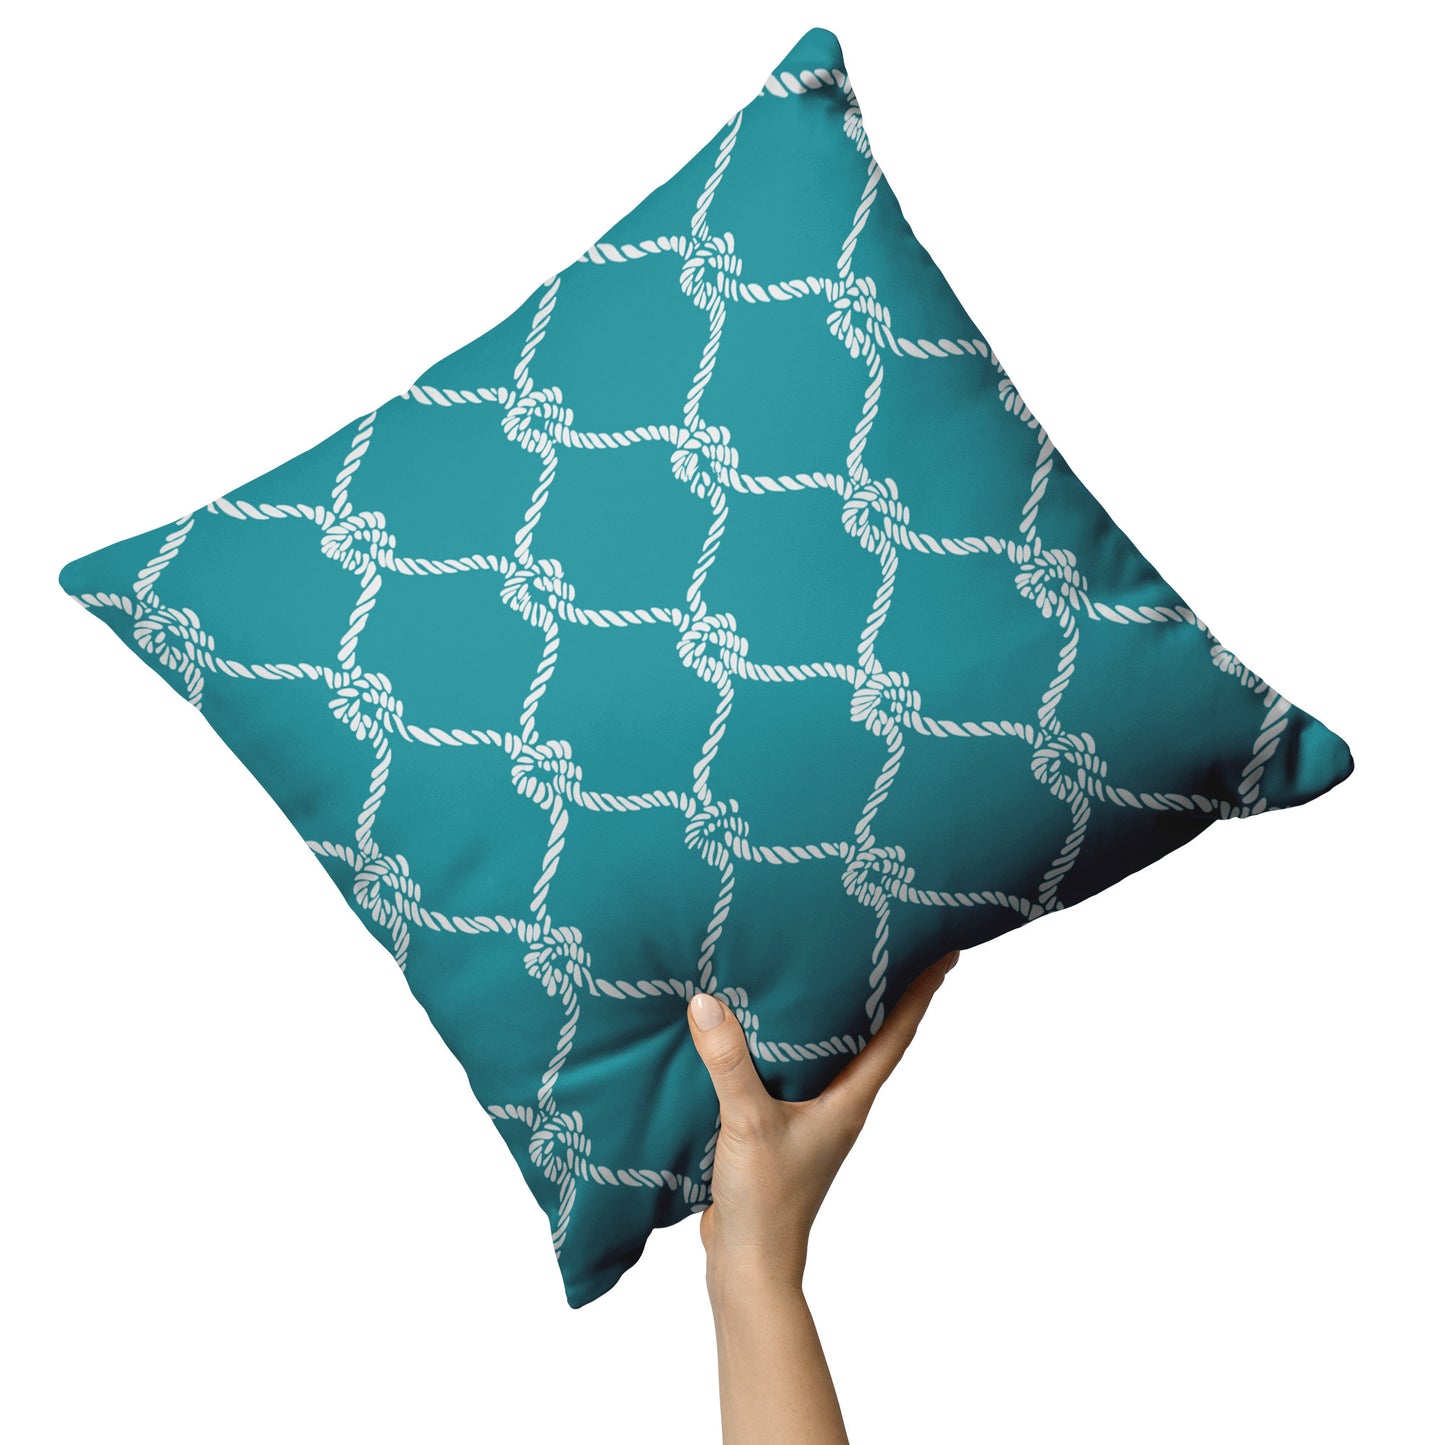 Nautical Netting Design on Teal Background, Throw Pillow